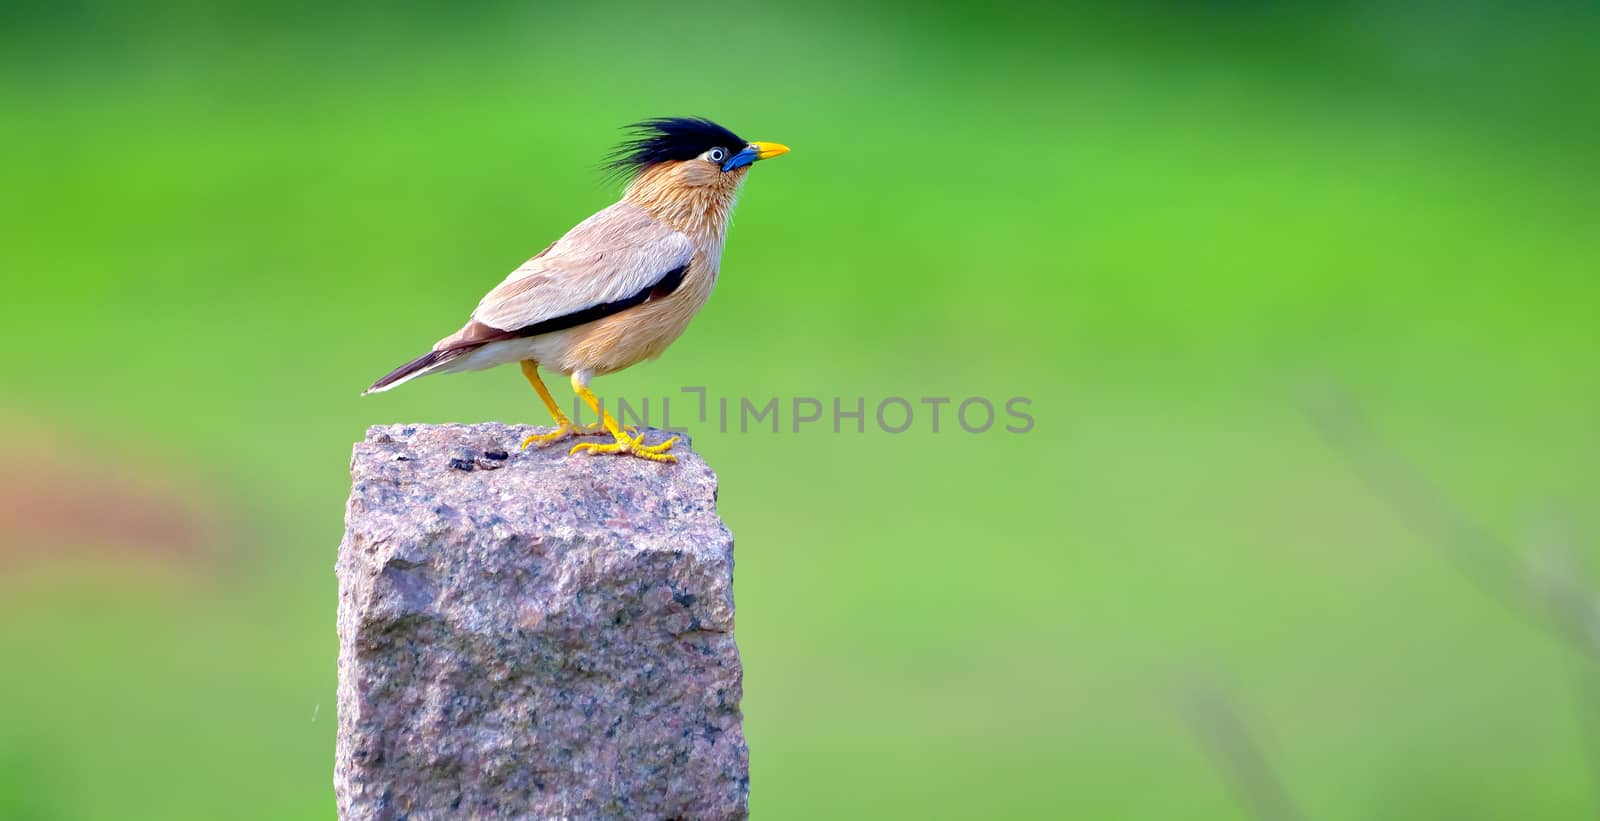 Brahminy starling standing on a rock pole by rkbalaji